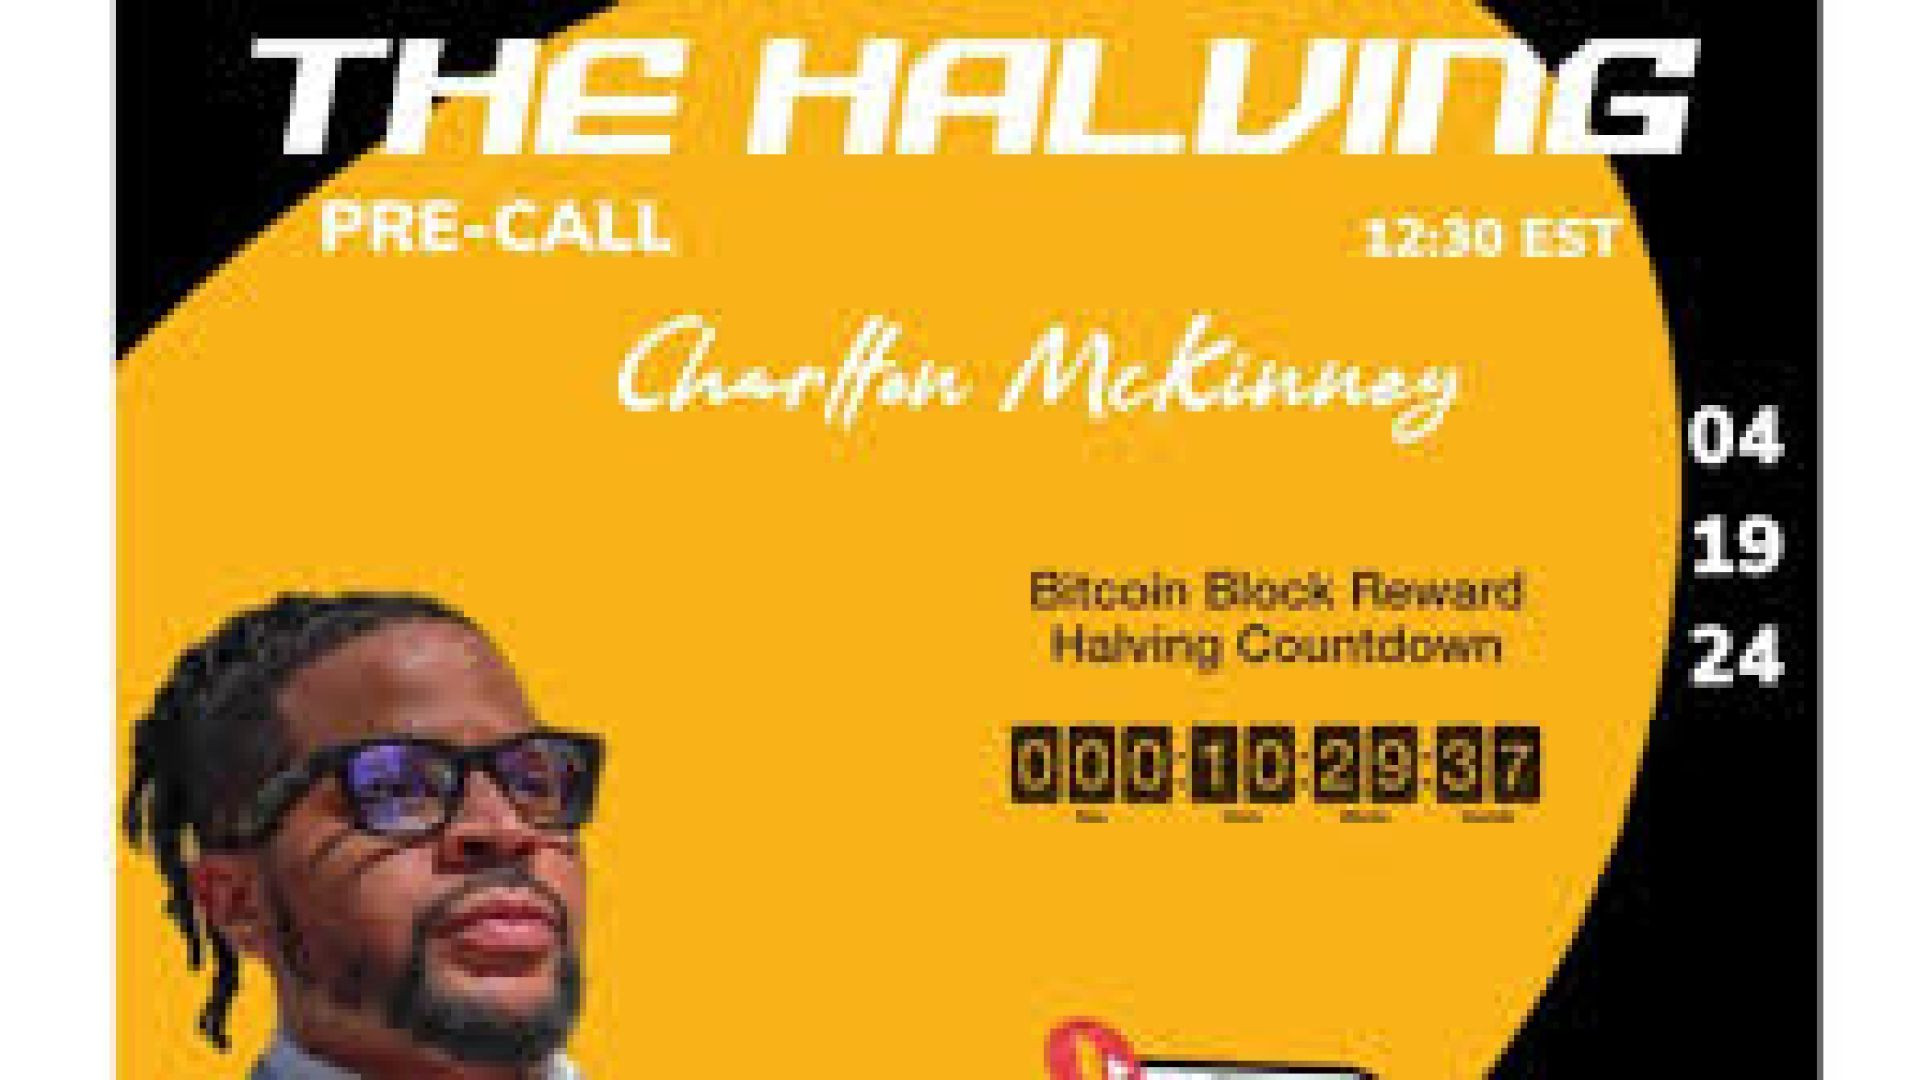 Bitcoin Block Reward Halving Countdown With Charlton McKinney